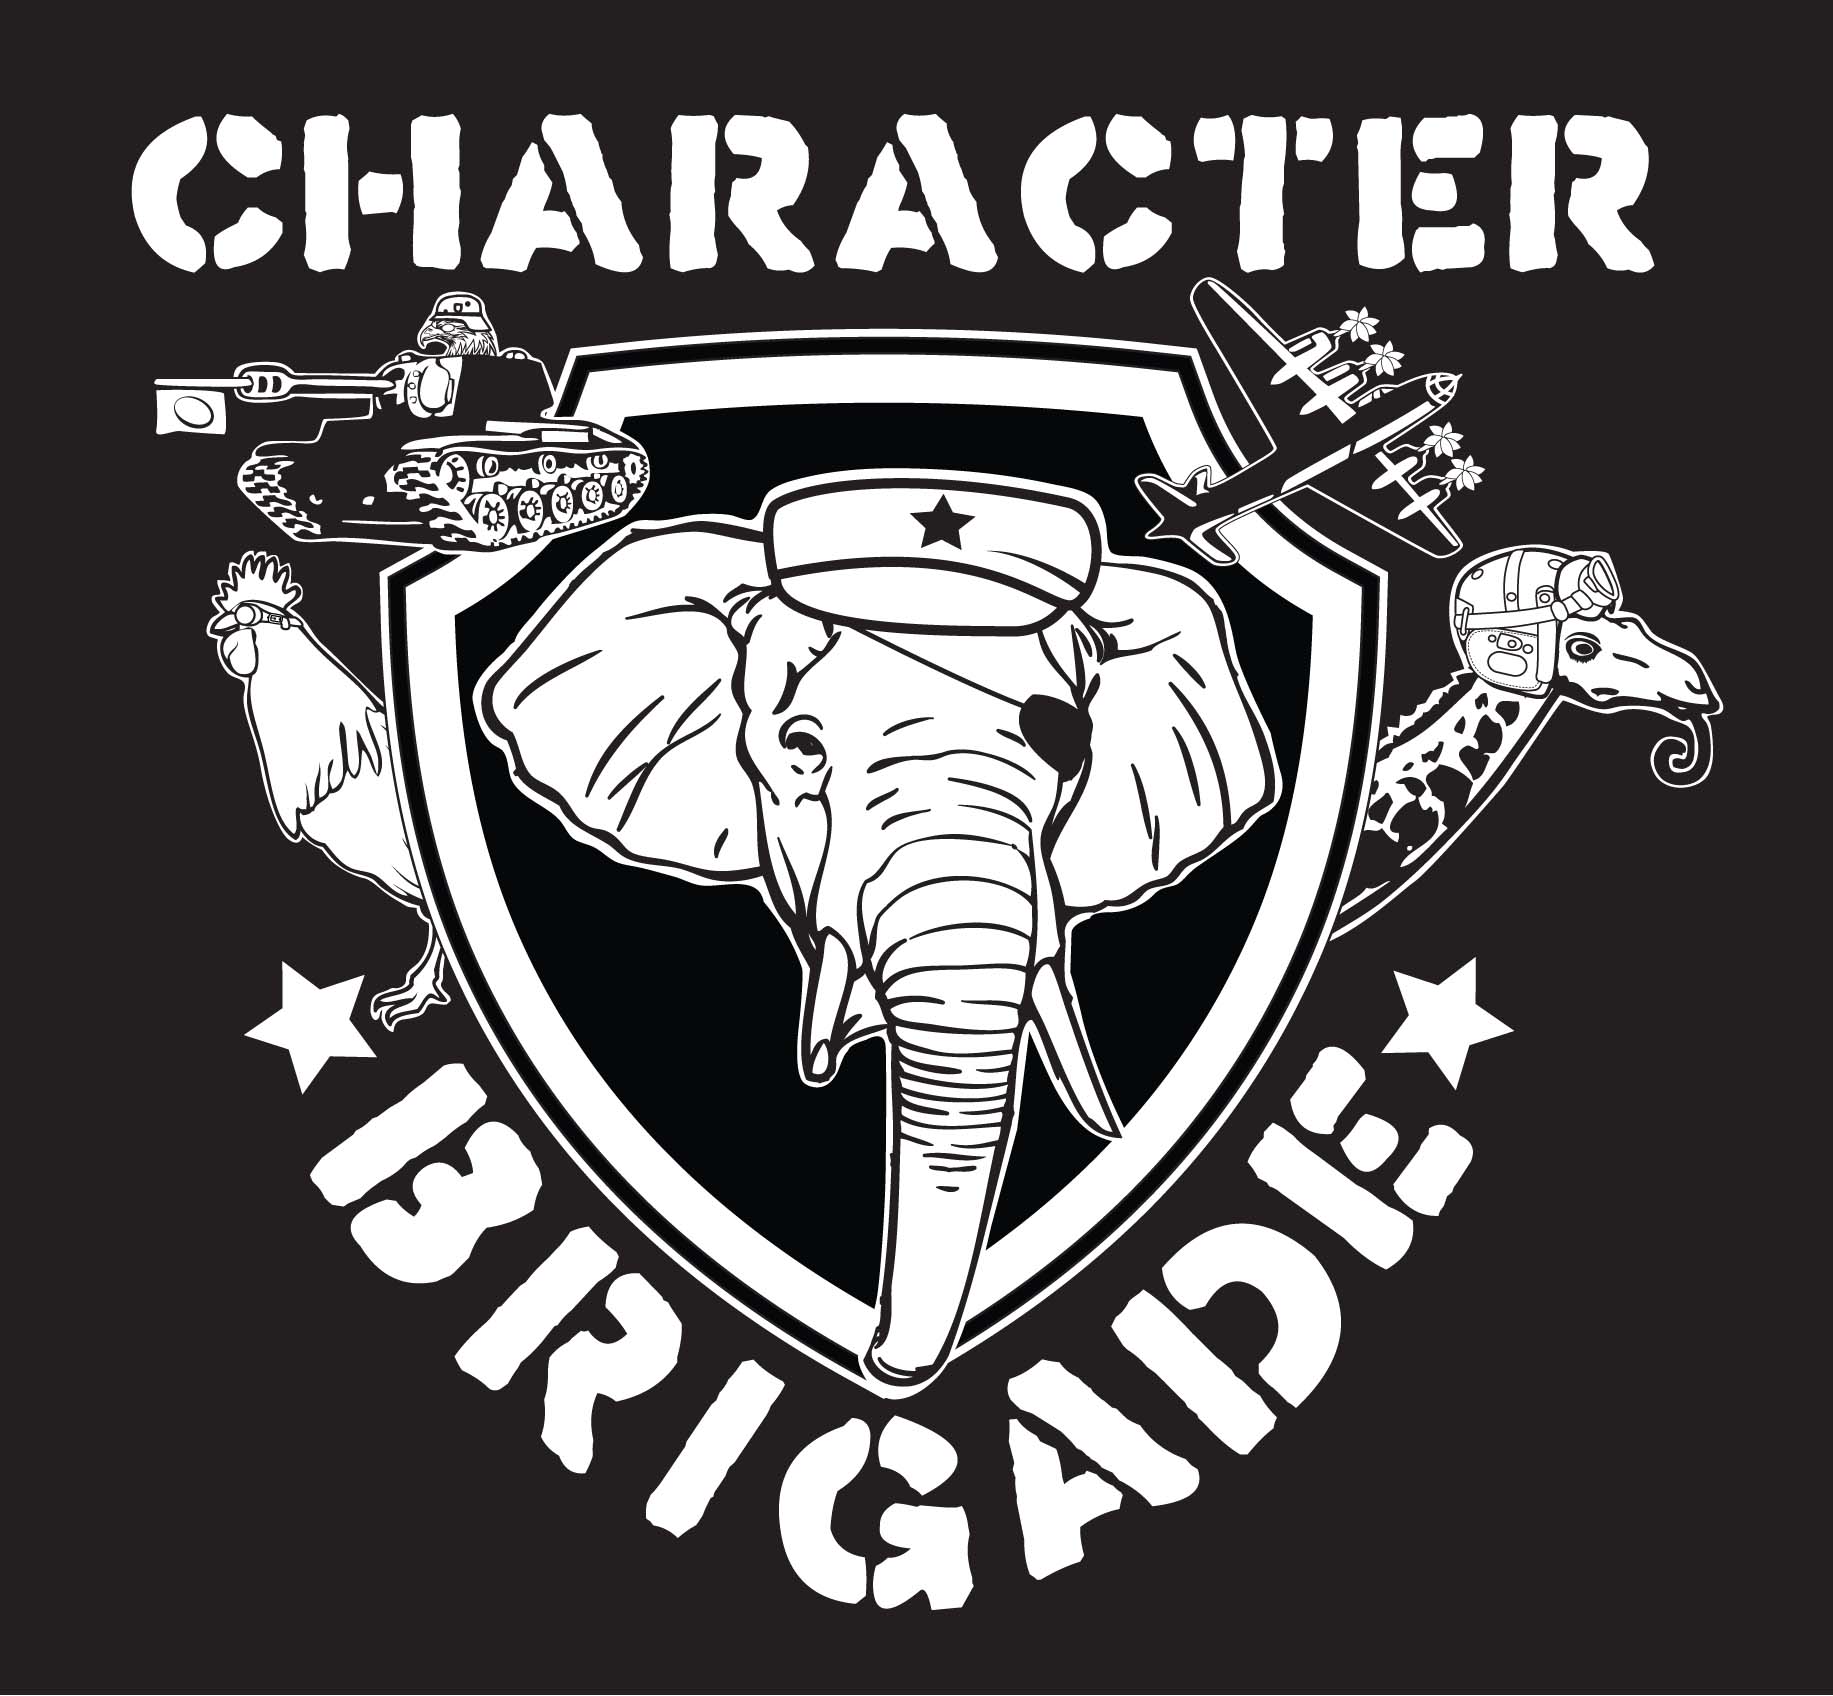 Character Brigade (Production Company)